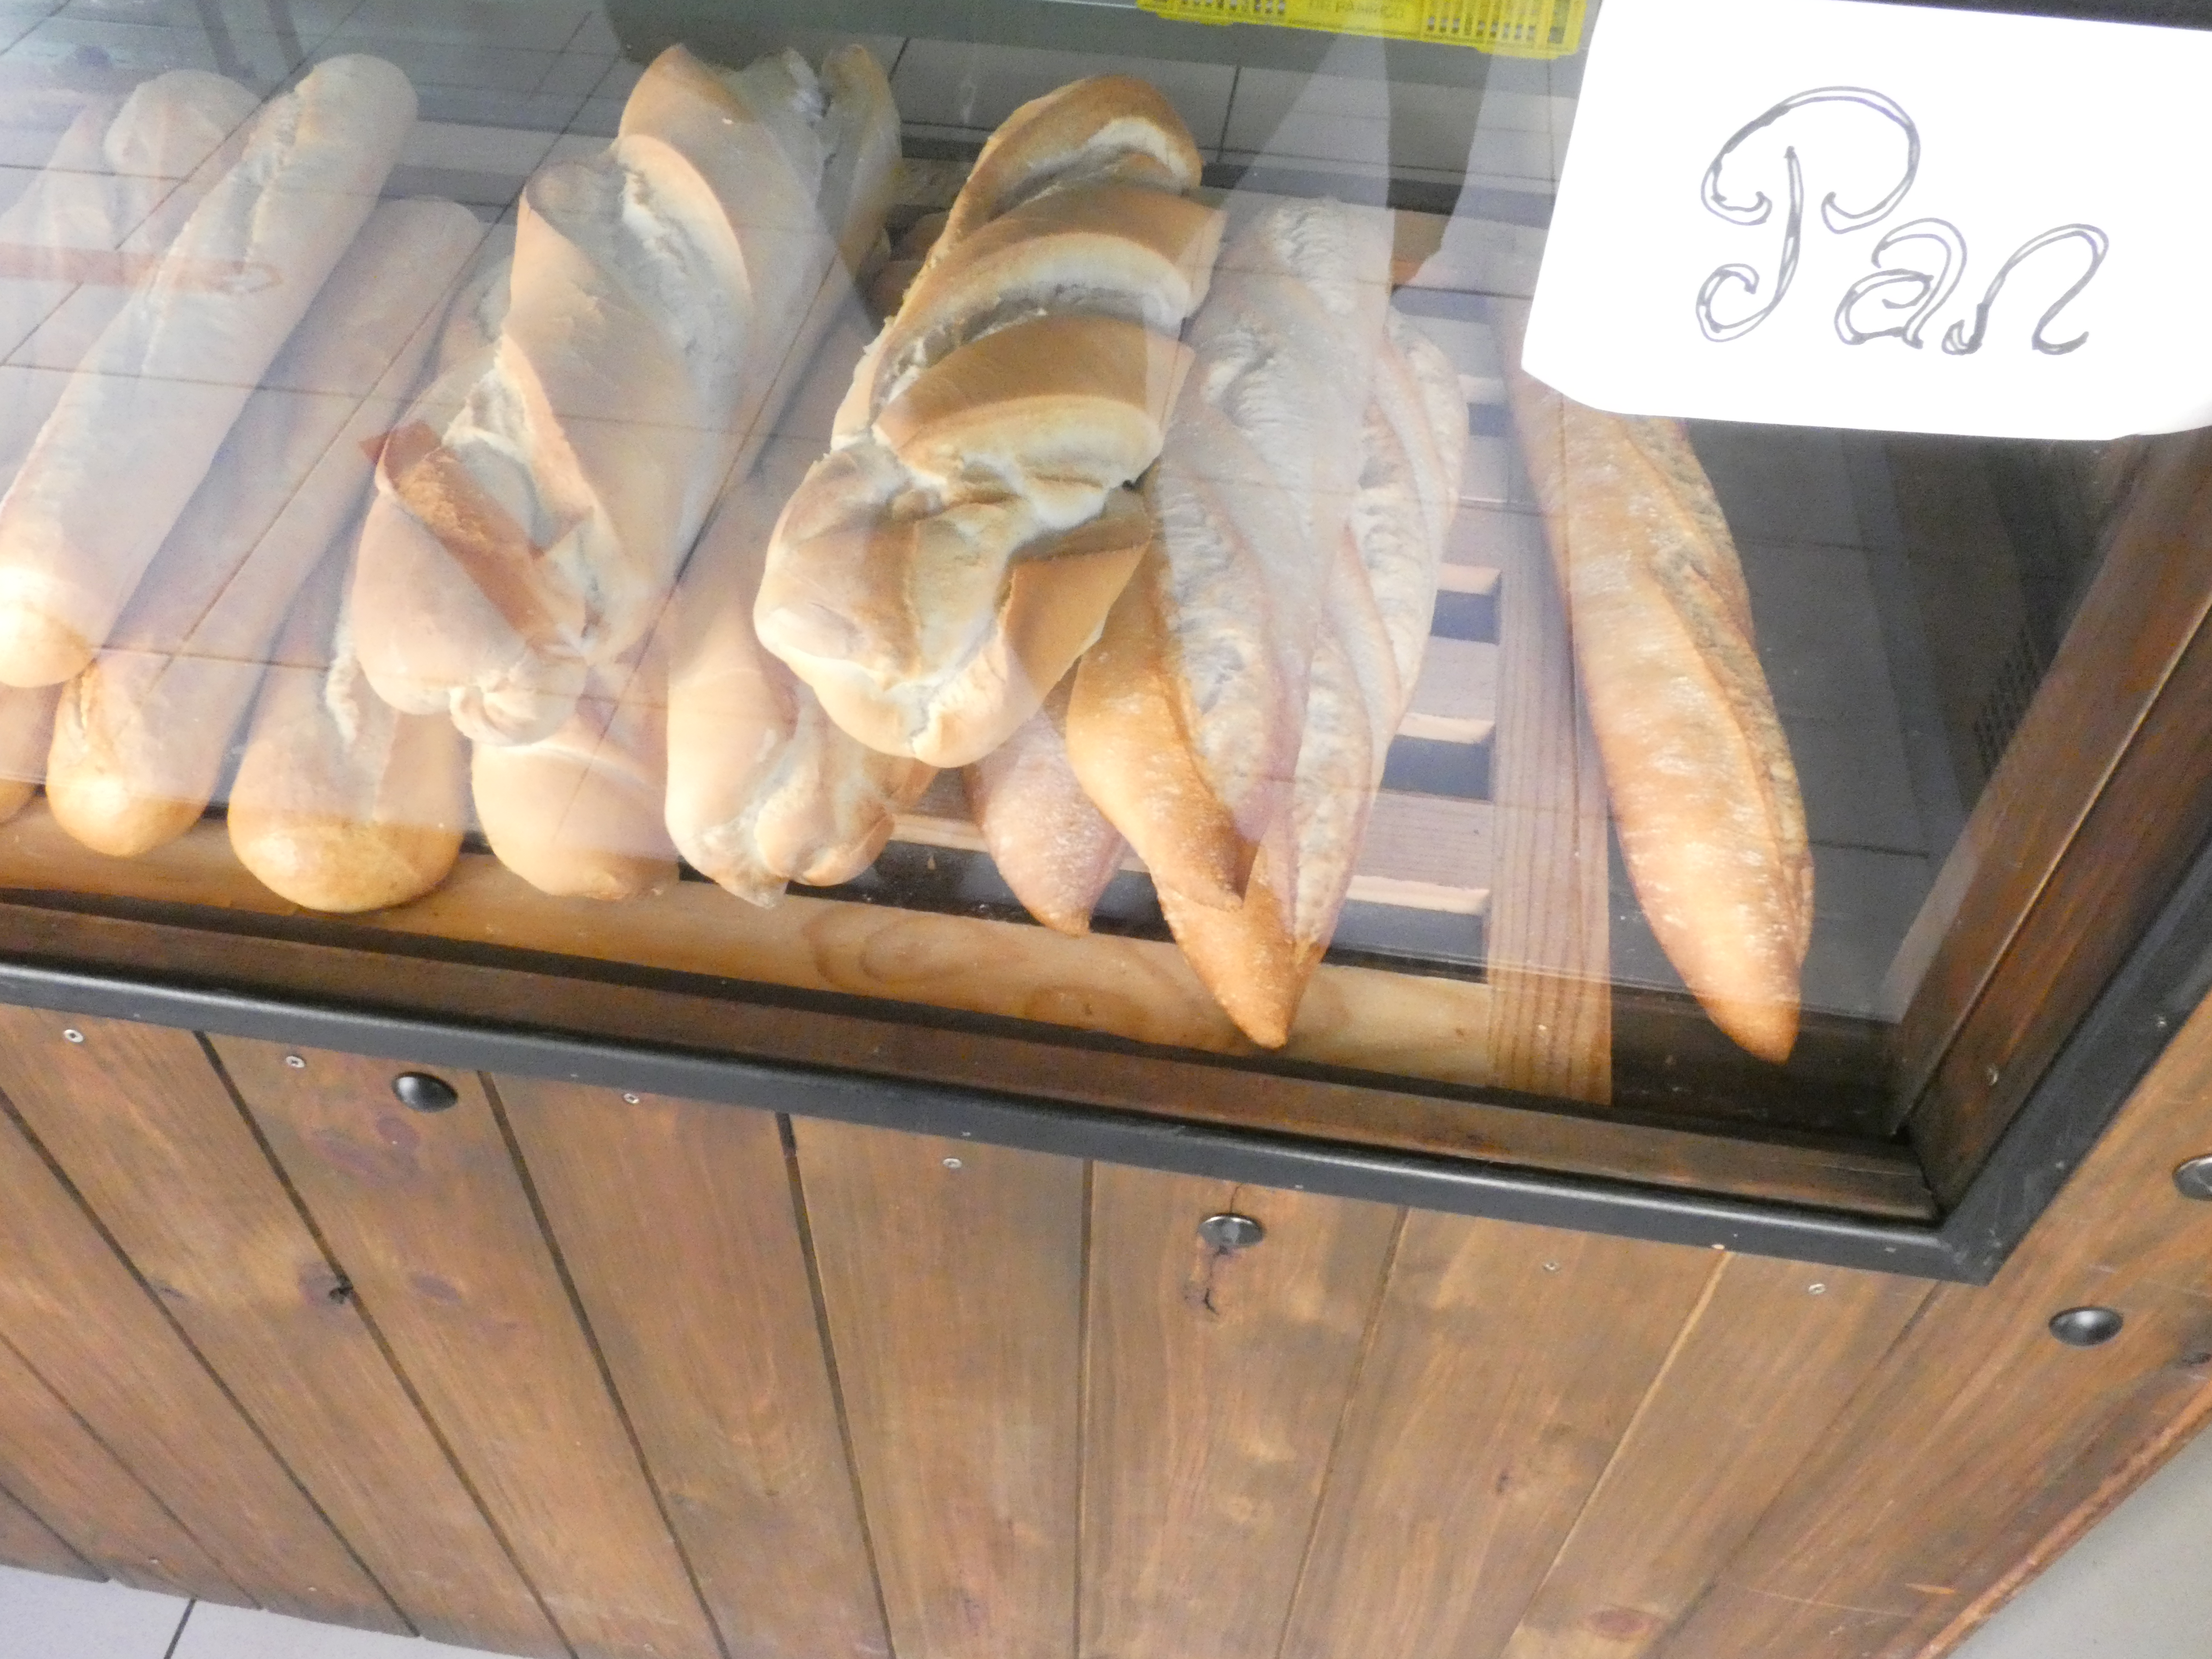 vitrina calefactada con pan y baguettes